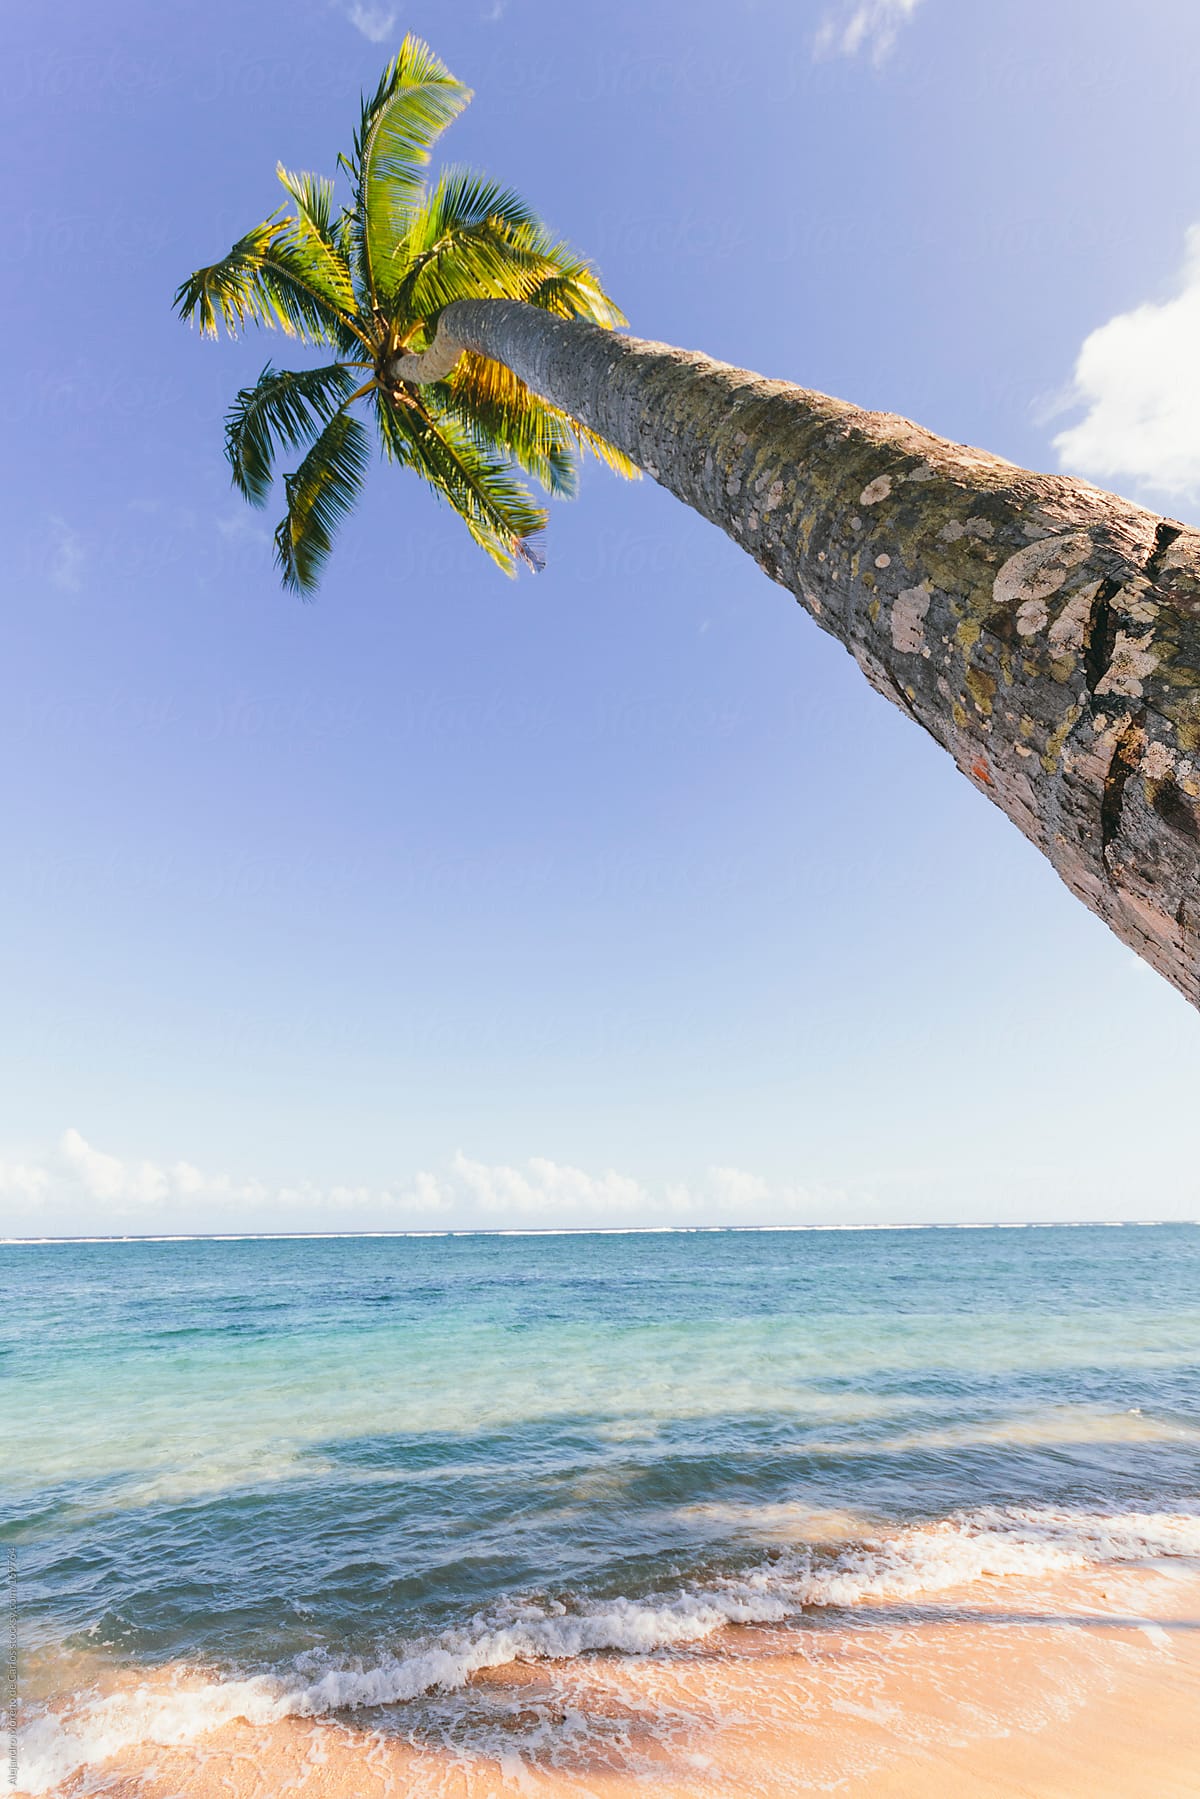 Palm Tree And Beach In Tropical Island By Stocksy Contributor Alejandro Moreno De Carlos